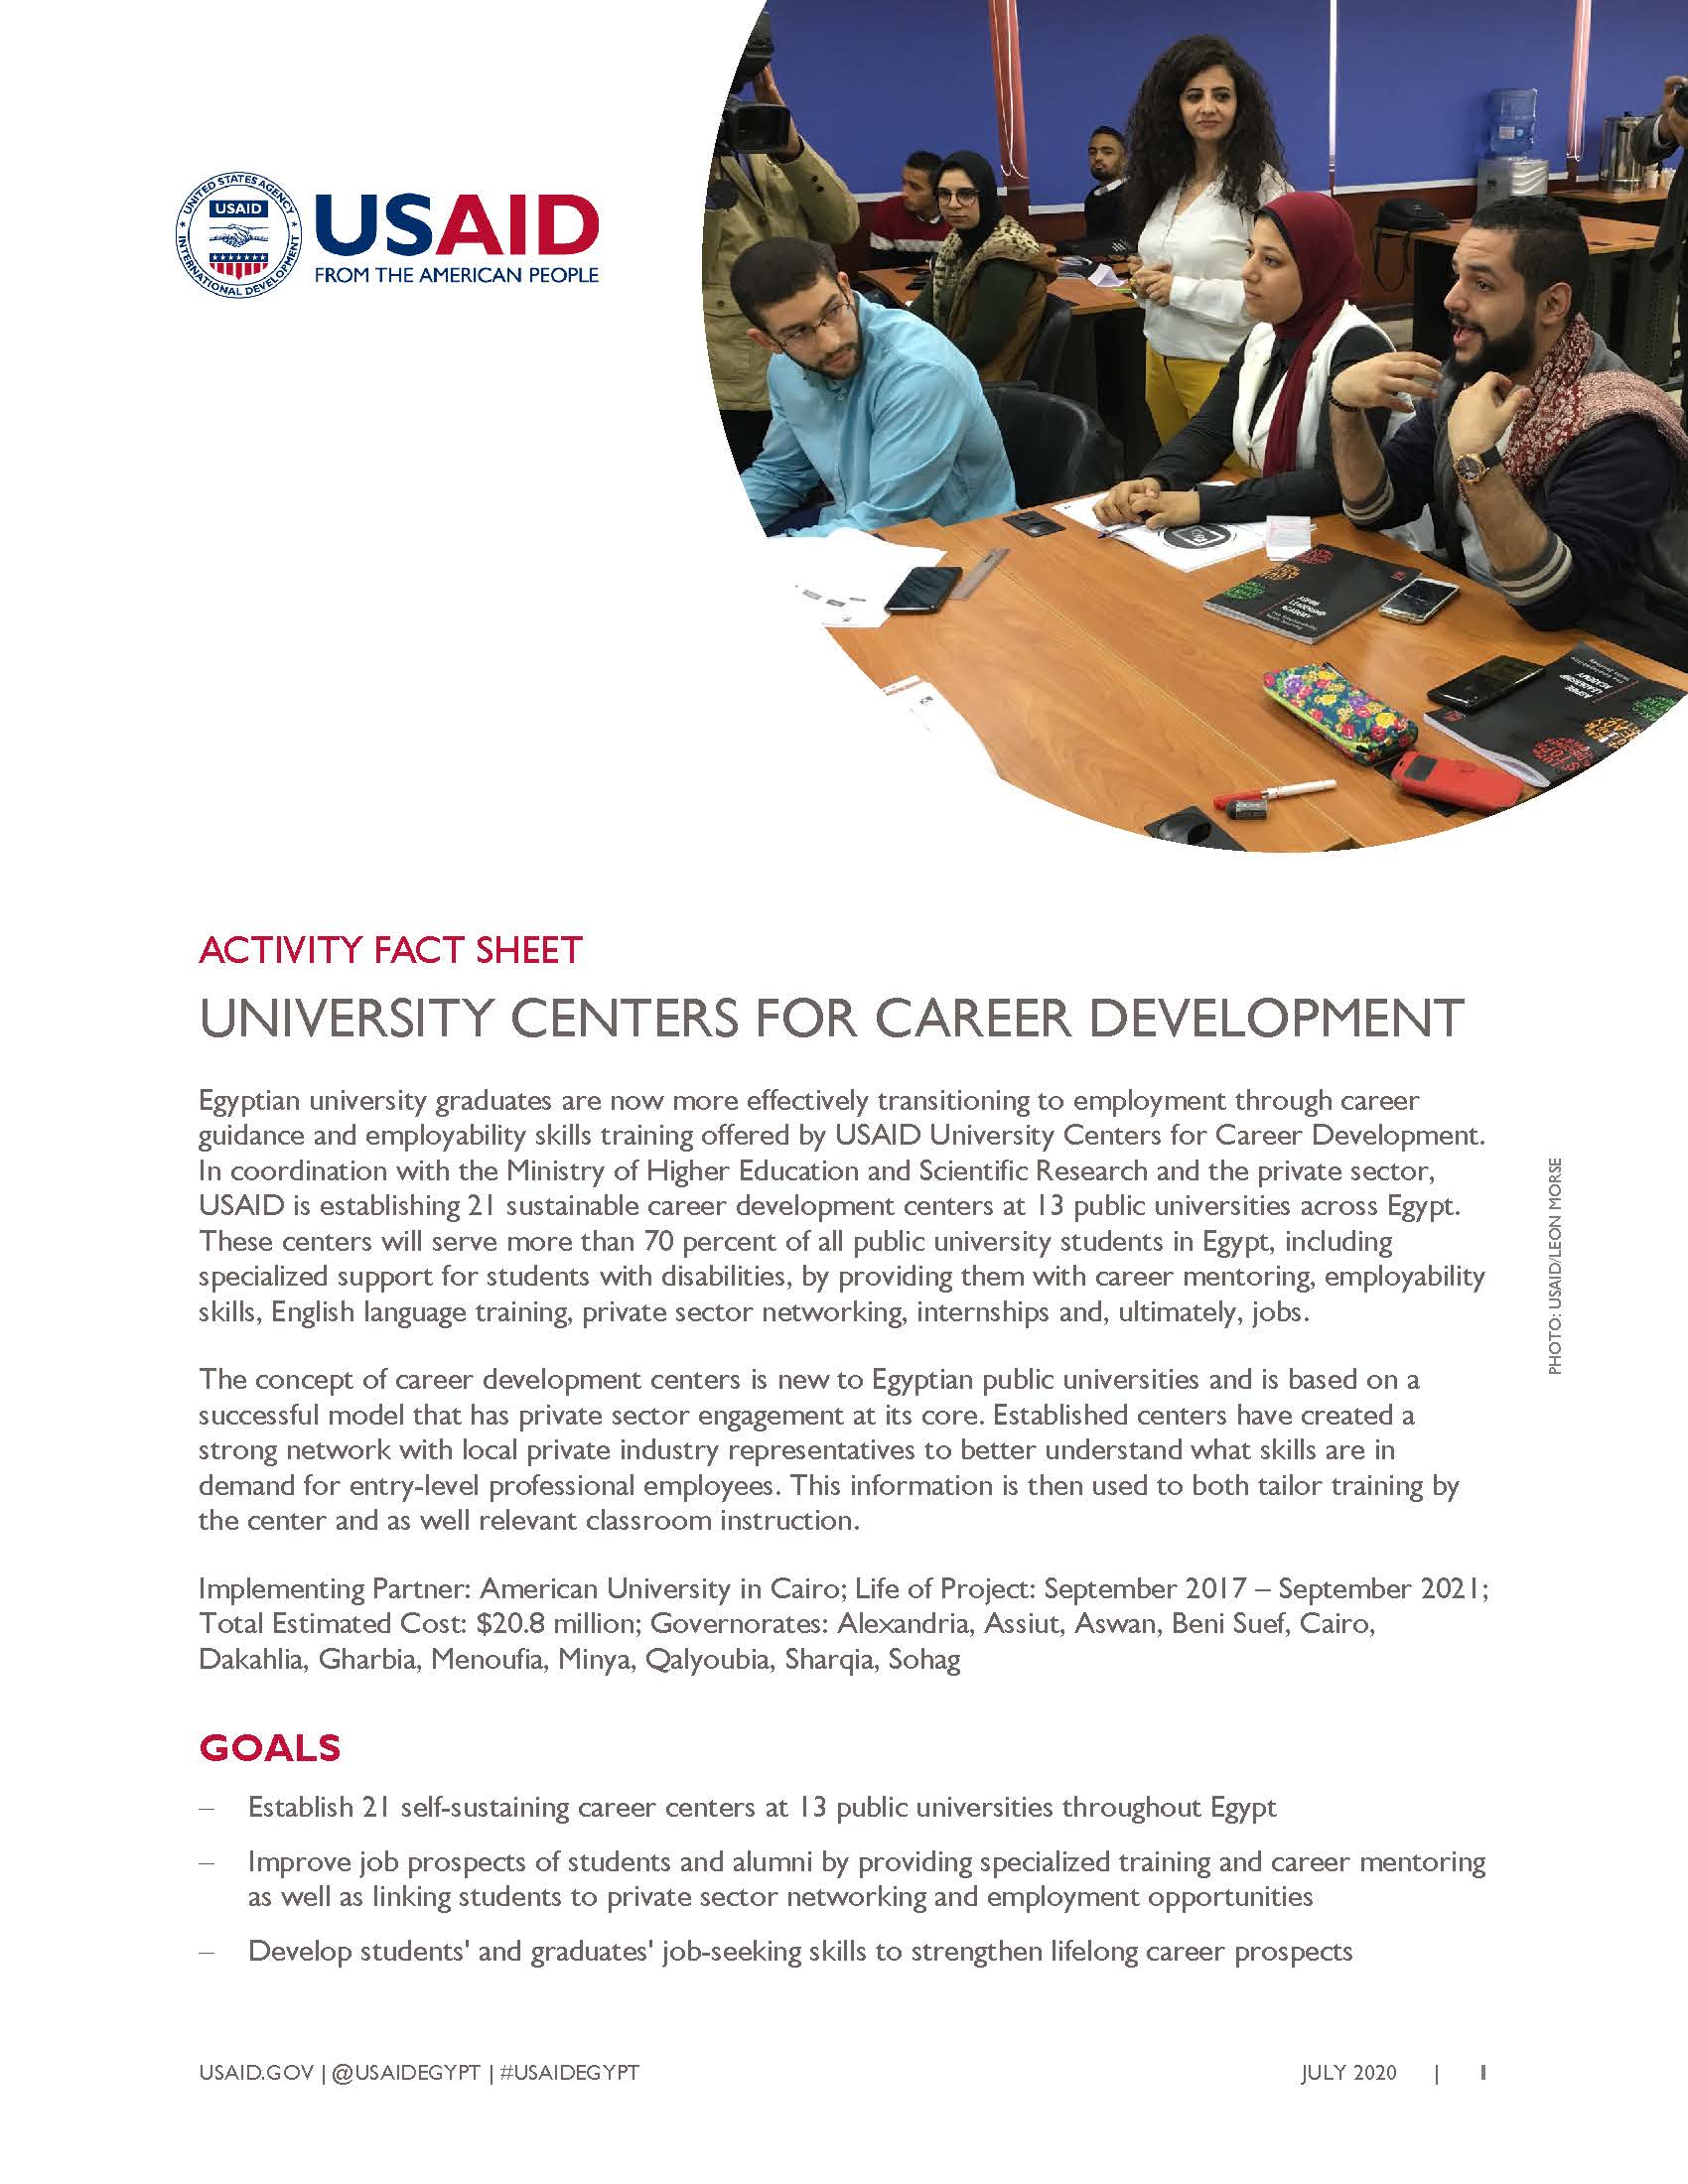 USAID/Egypt Activity Fact Sheet: University Centers for Career Development